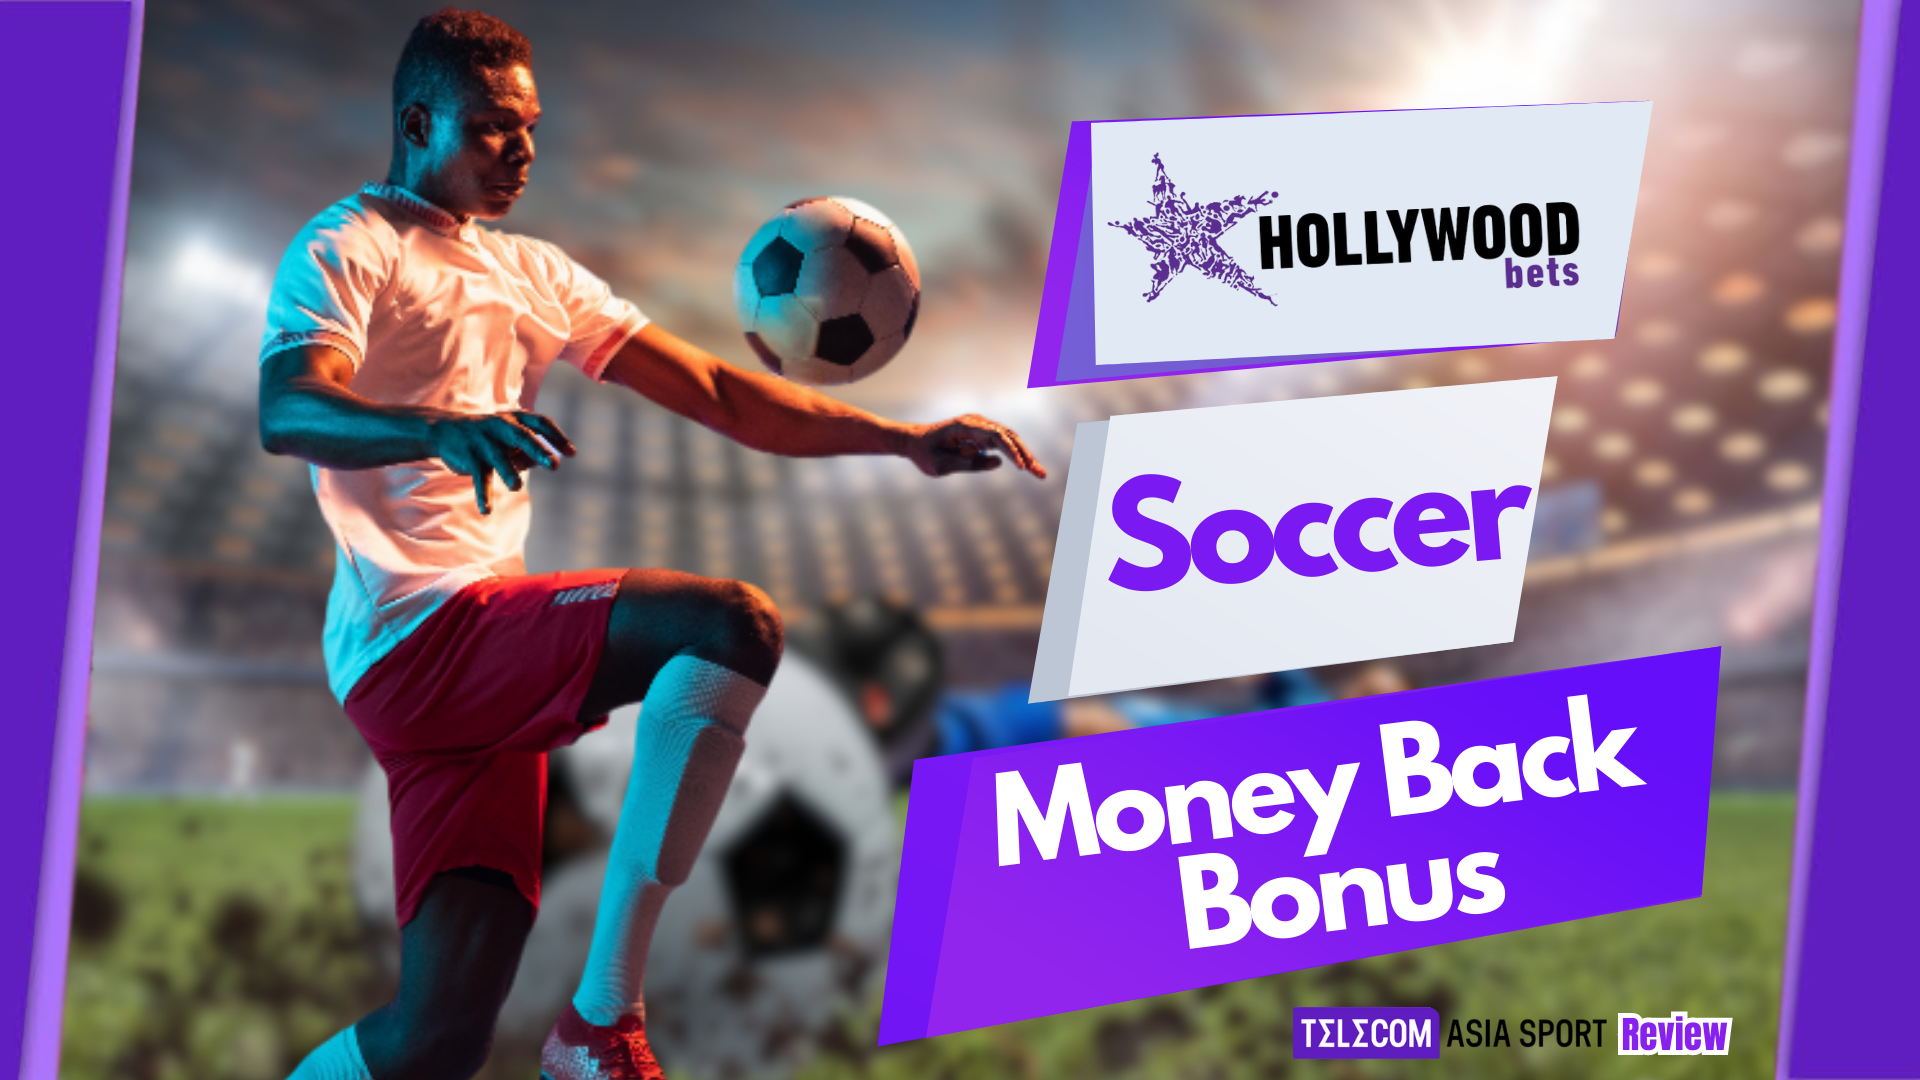 Hollywoodbets soccer promotion